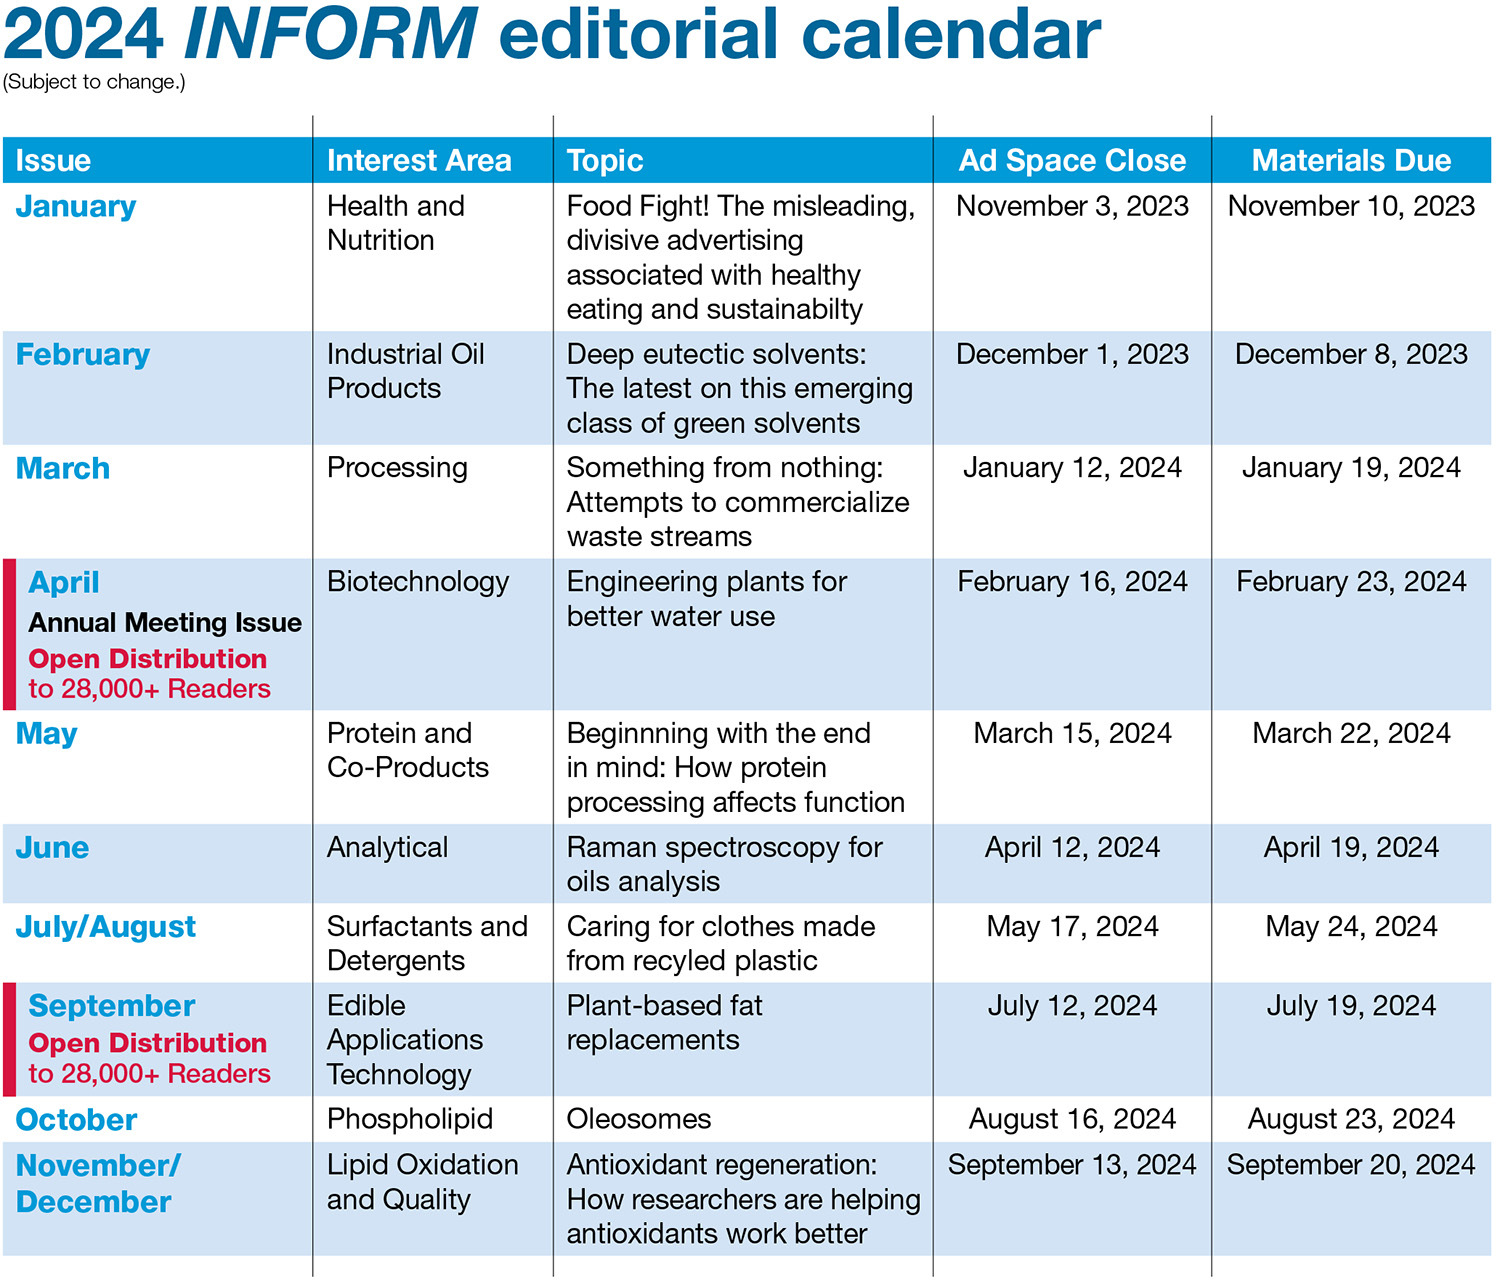 2023 INFORM editorial calendar